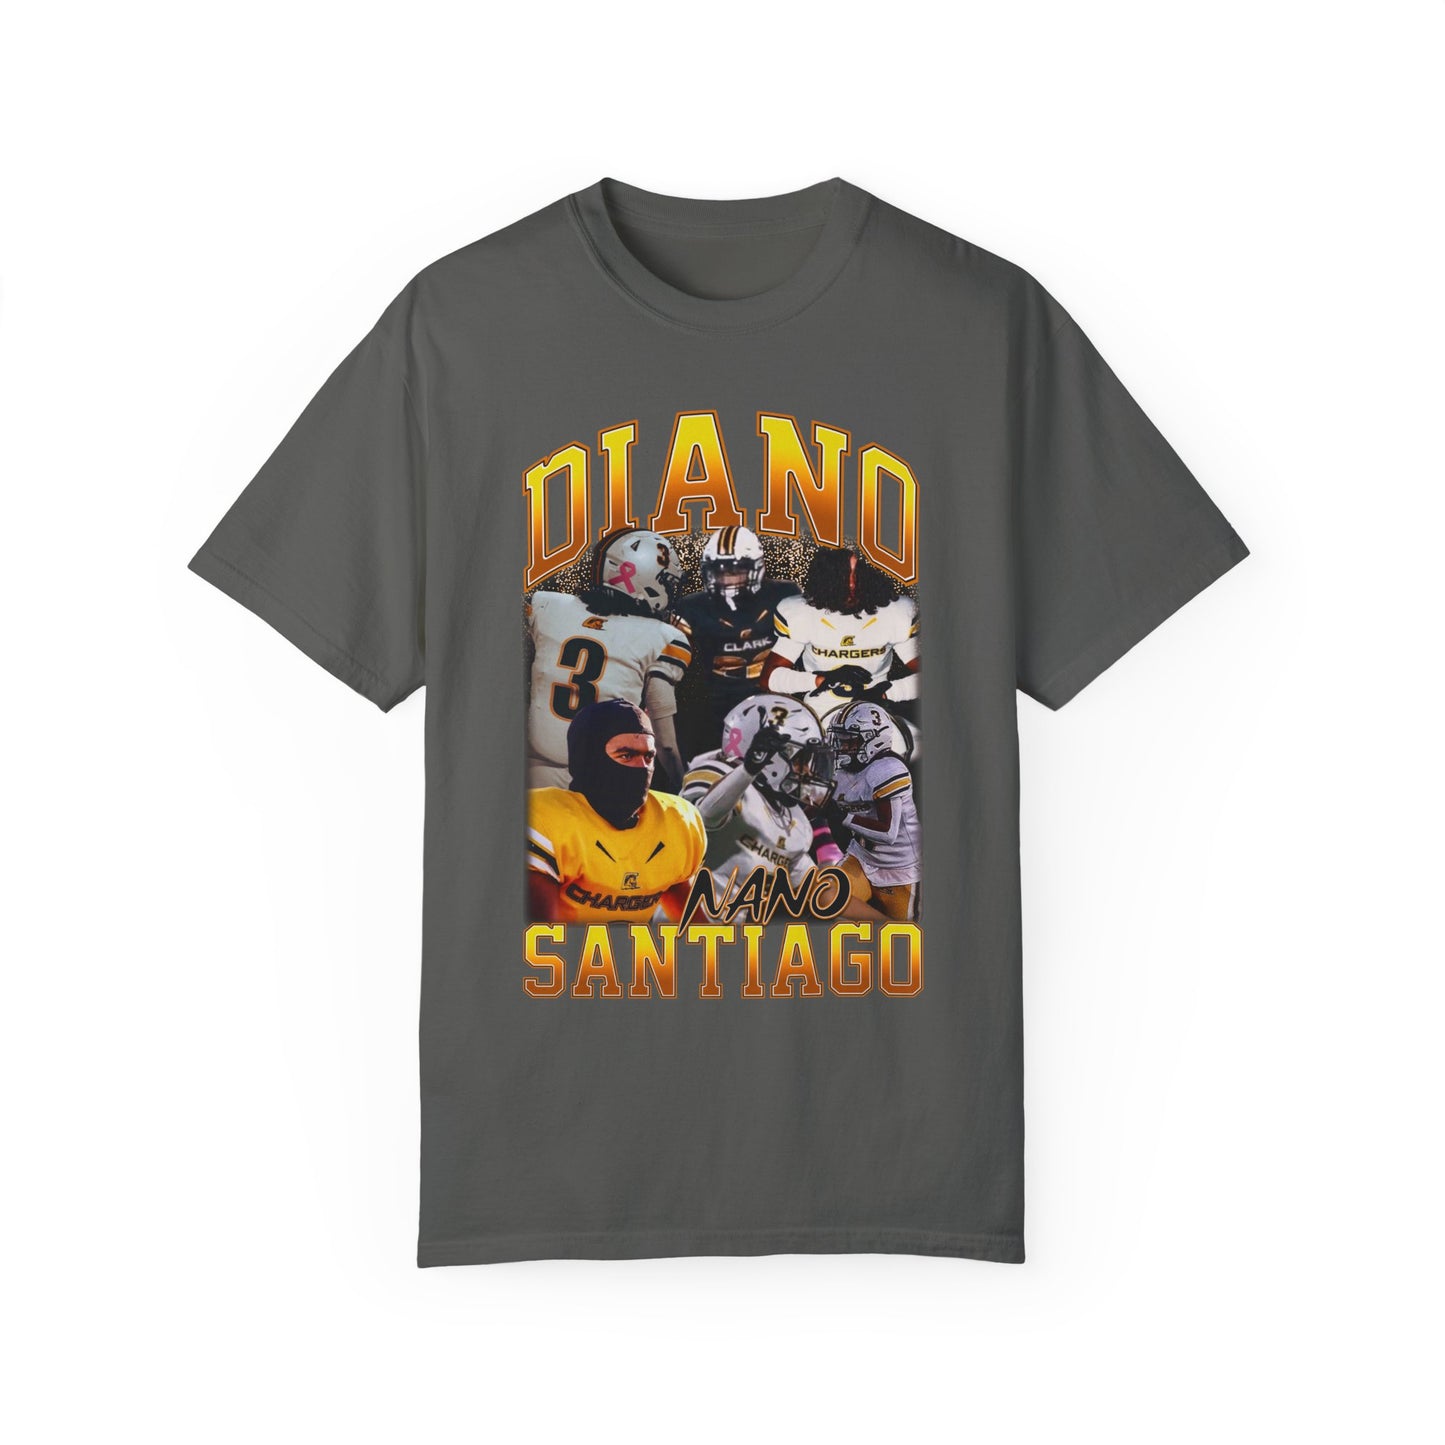 Diano Santiago Graphic T-shirt